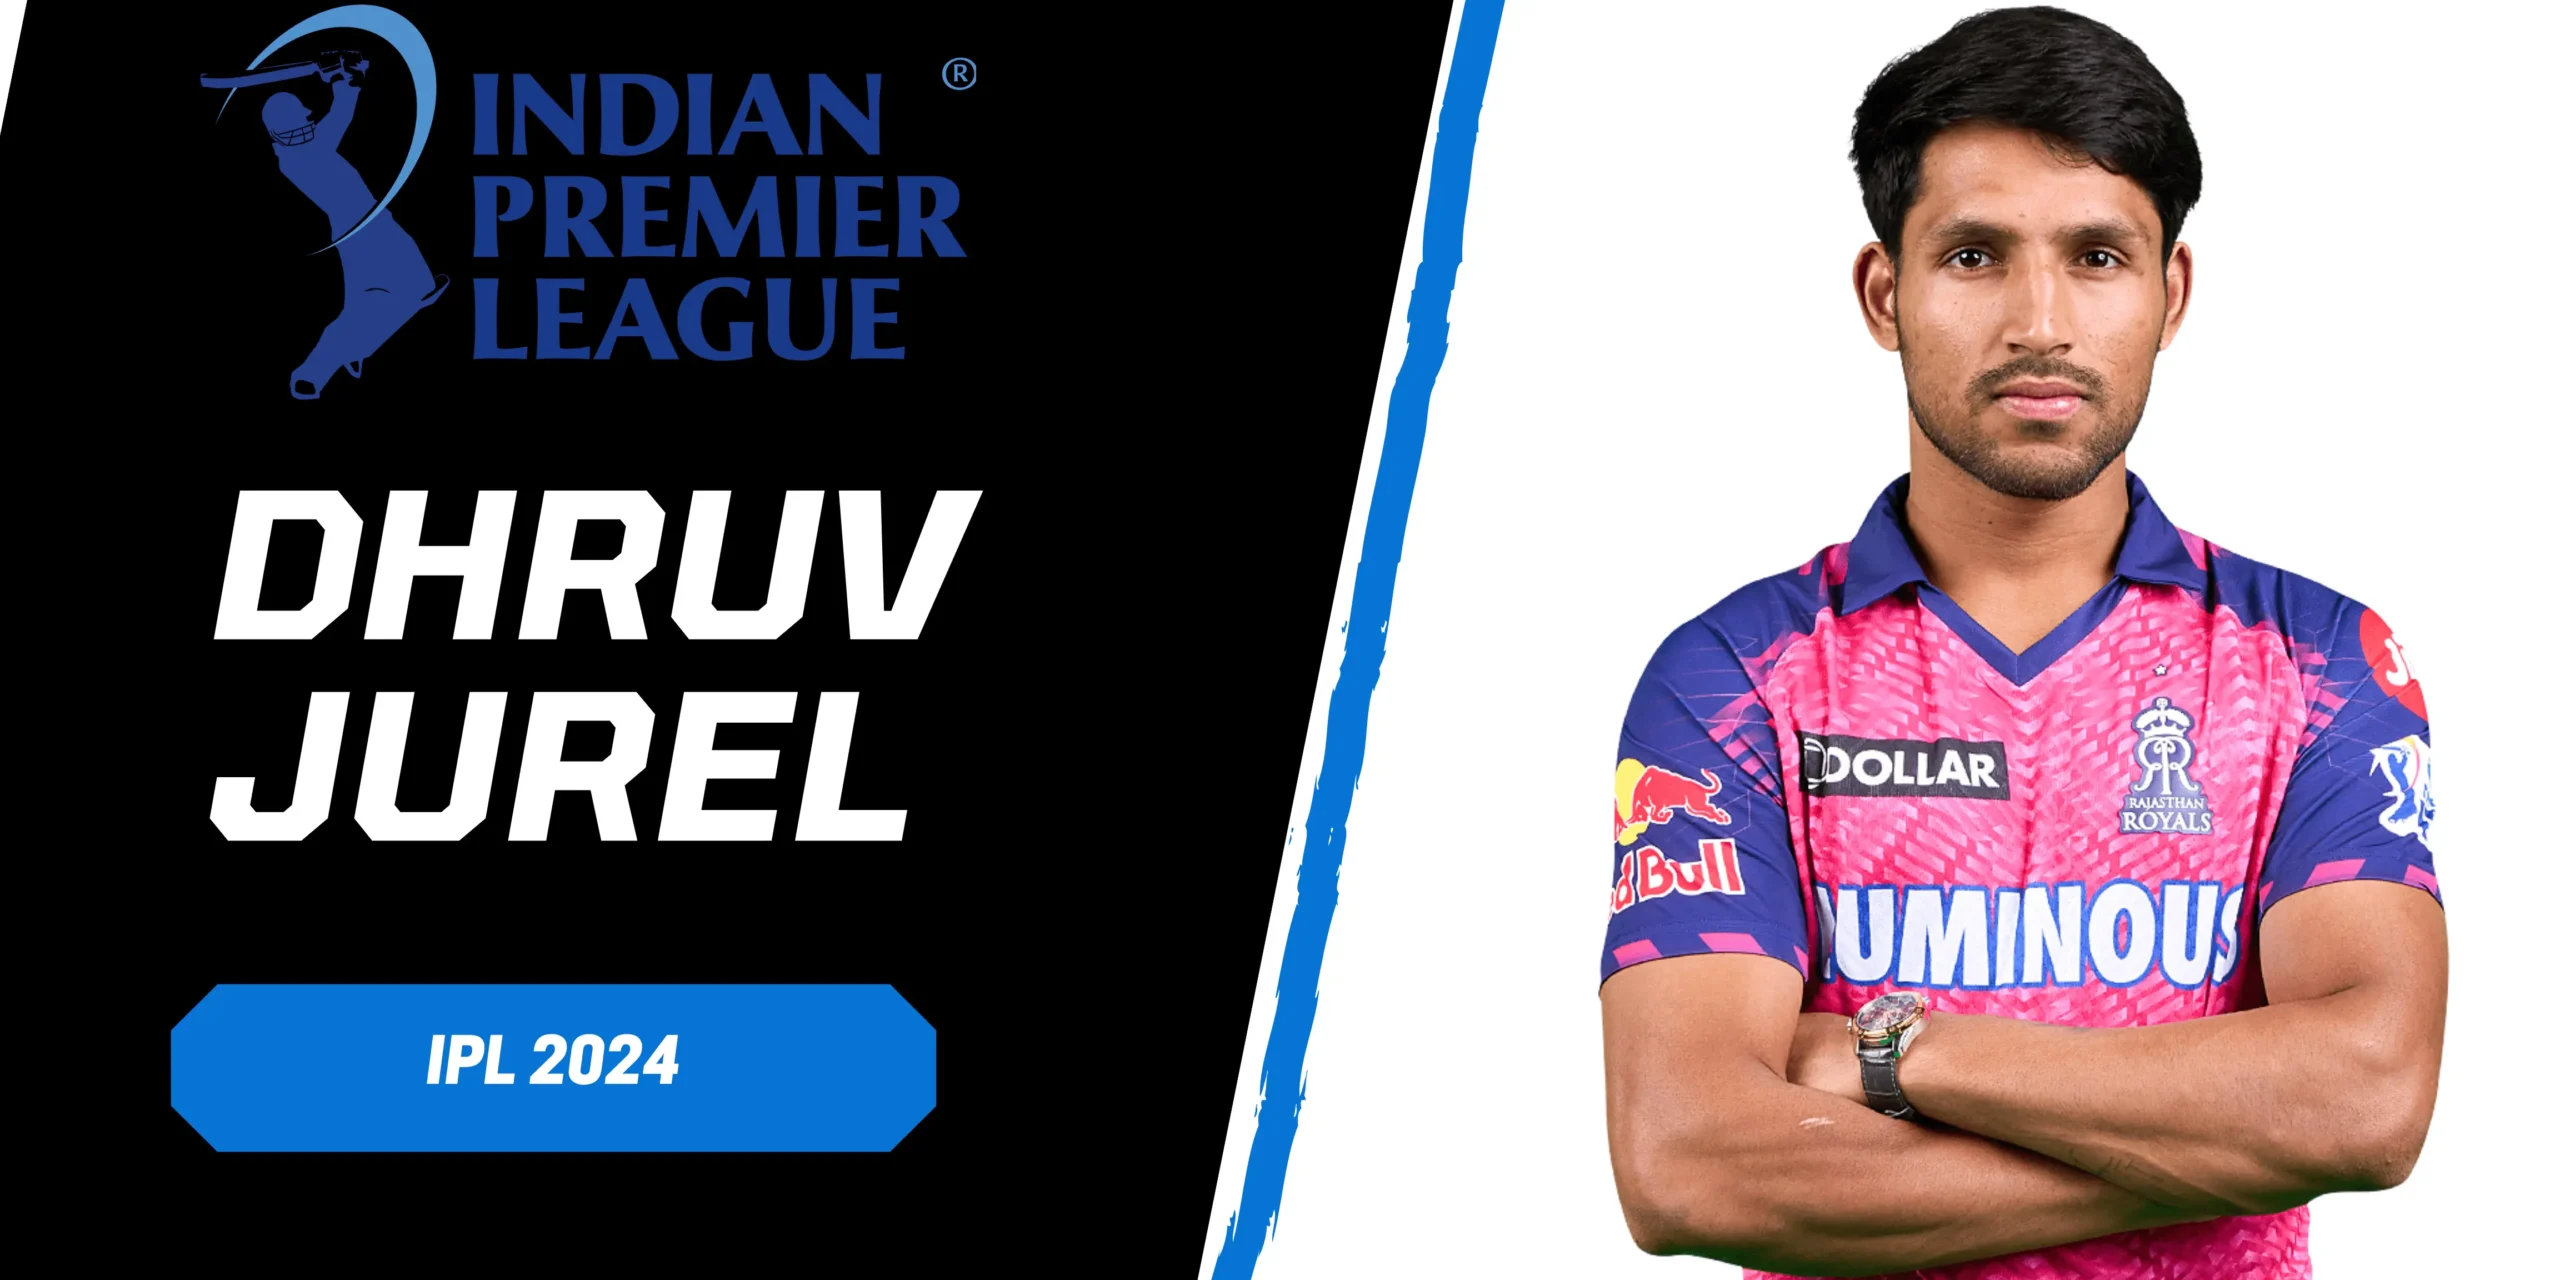 Dhruv Jurel IPL 2024 Team, Awards, Career, Salary, Performance, Records